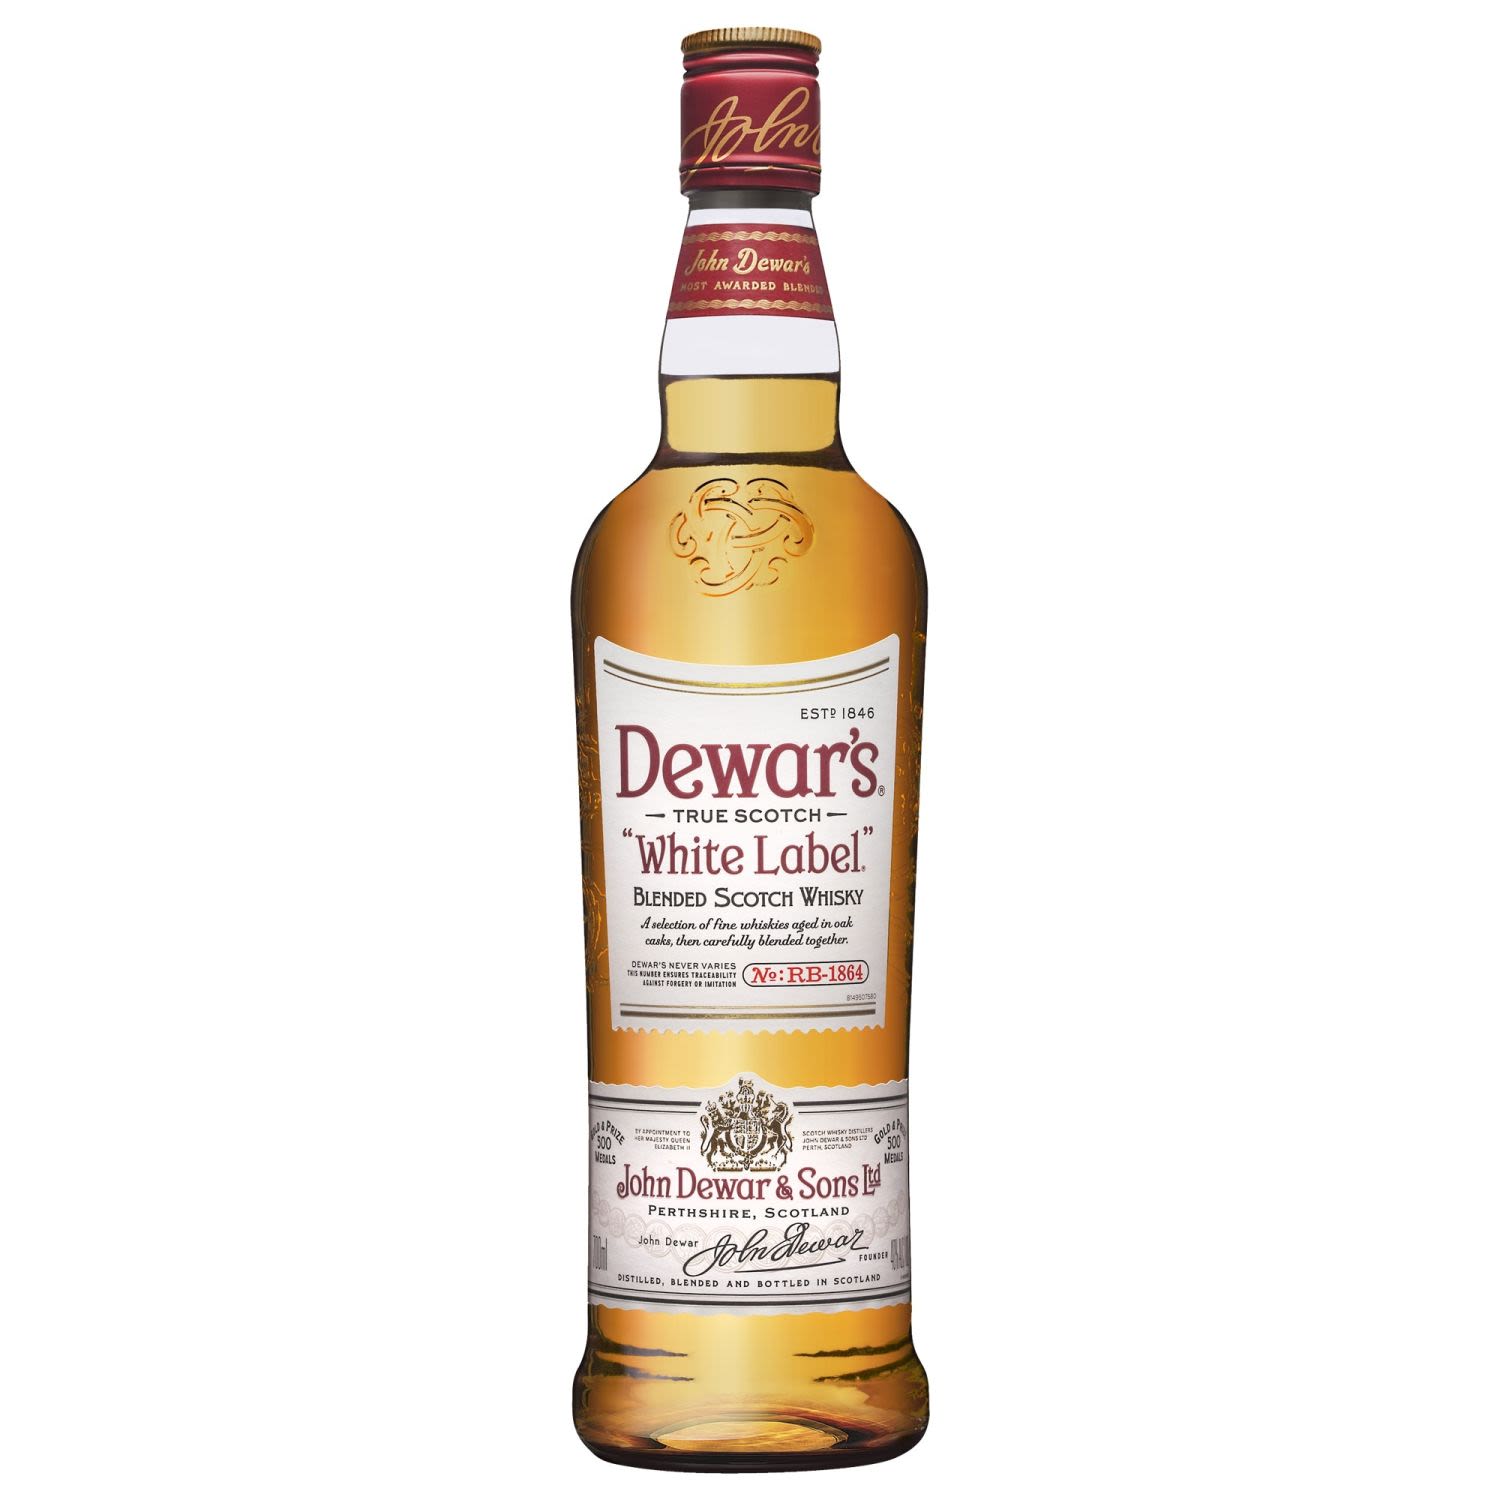 Dewar's White Label Blended Scotch Whisky 40% 700mL Bottle